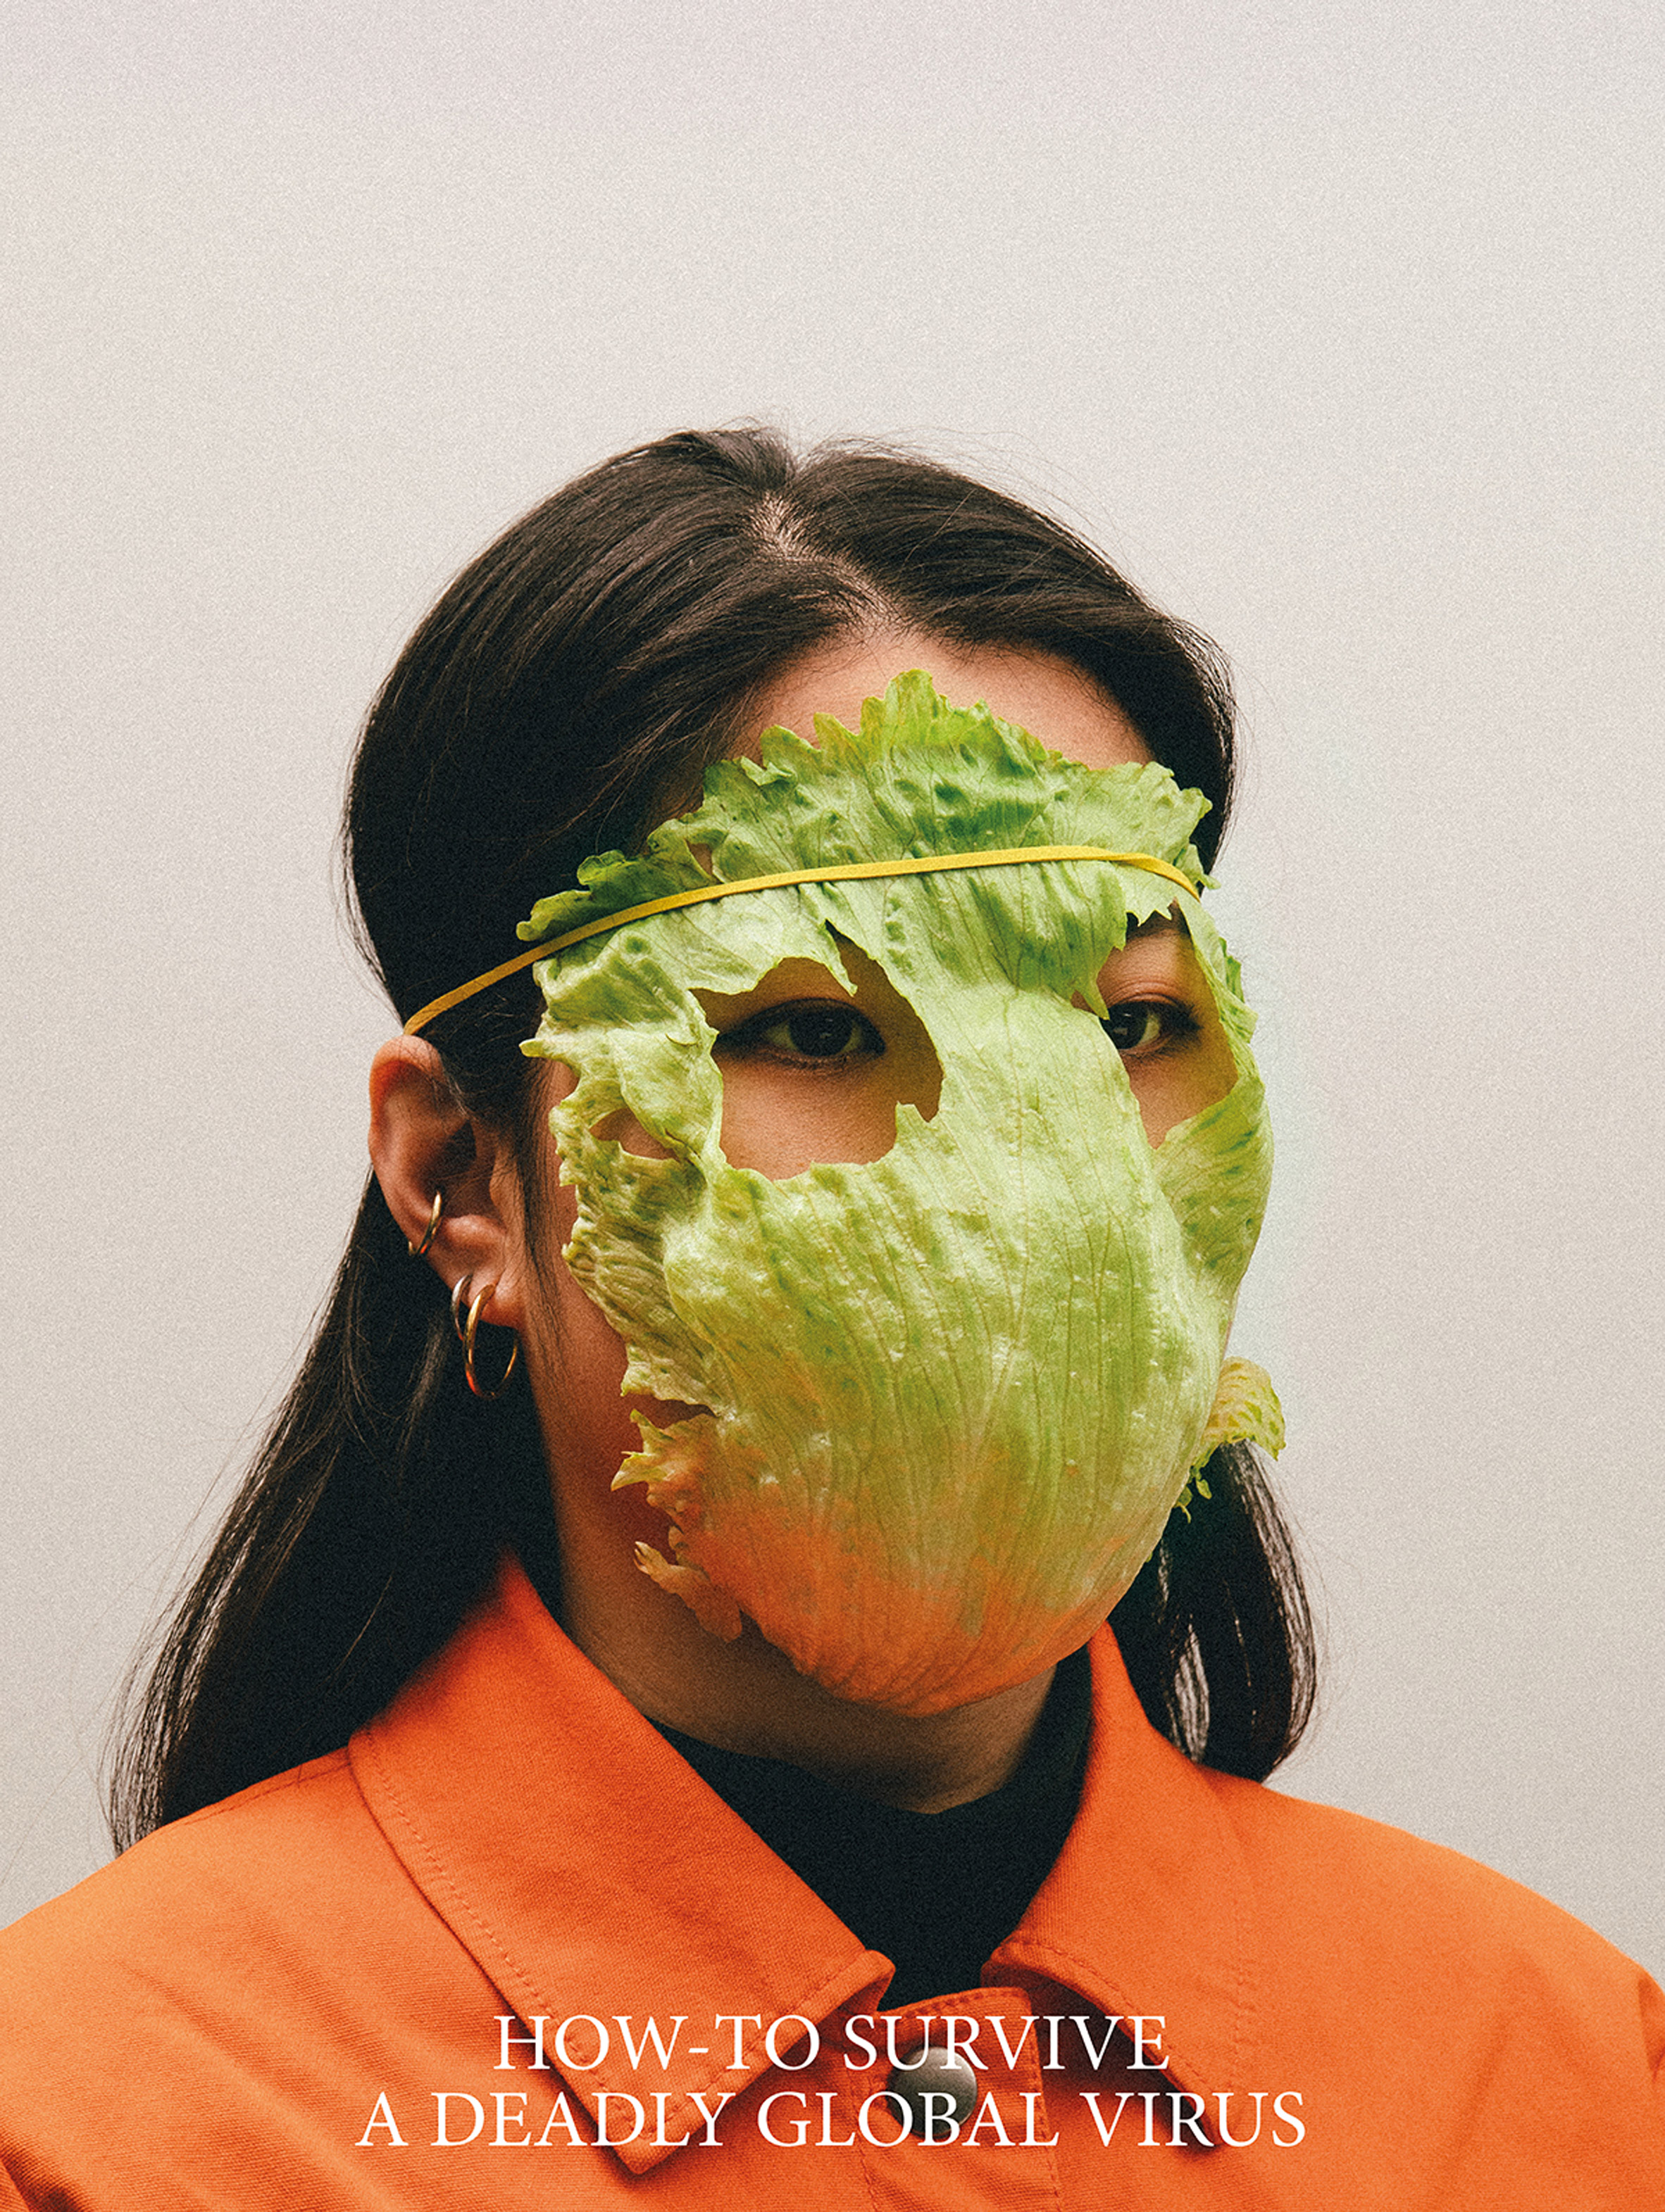 Alternative Coronavirus masks by Max Siedentopf with lettuce leaf